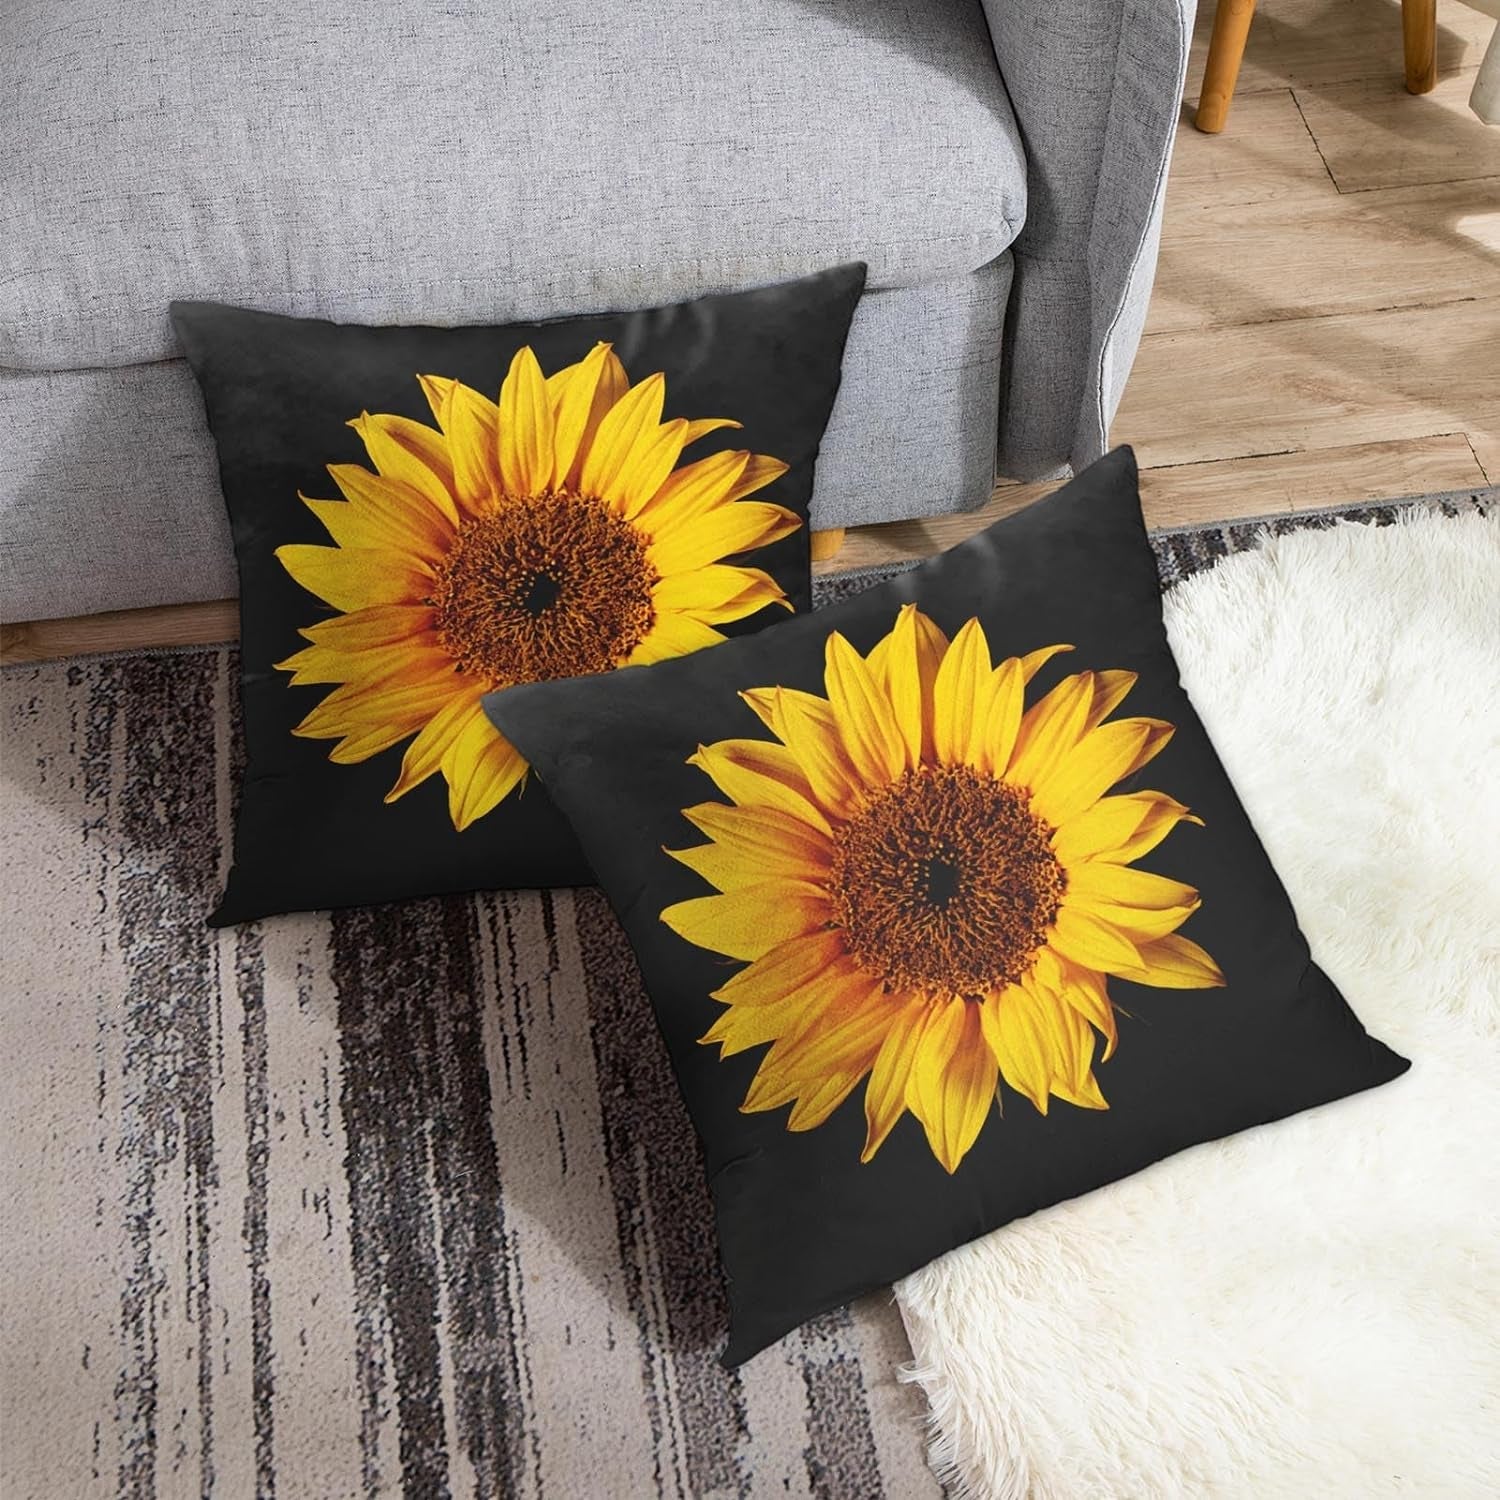 Emvency Set of 2 Sunflower Throw Pillow Covers Yellow Black Sun Flowers Decor Pillowcases Polyester 18 X 18 Inch Square Hidden Zipper Home Cushion Decorative Pillowcase